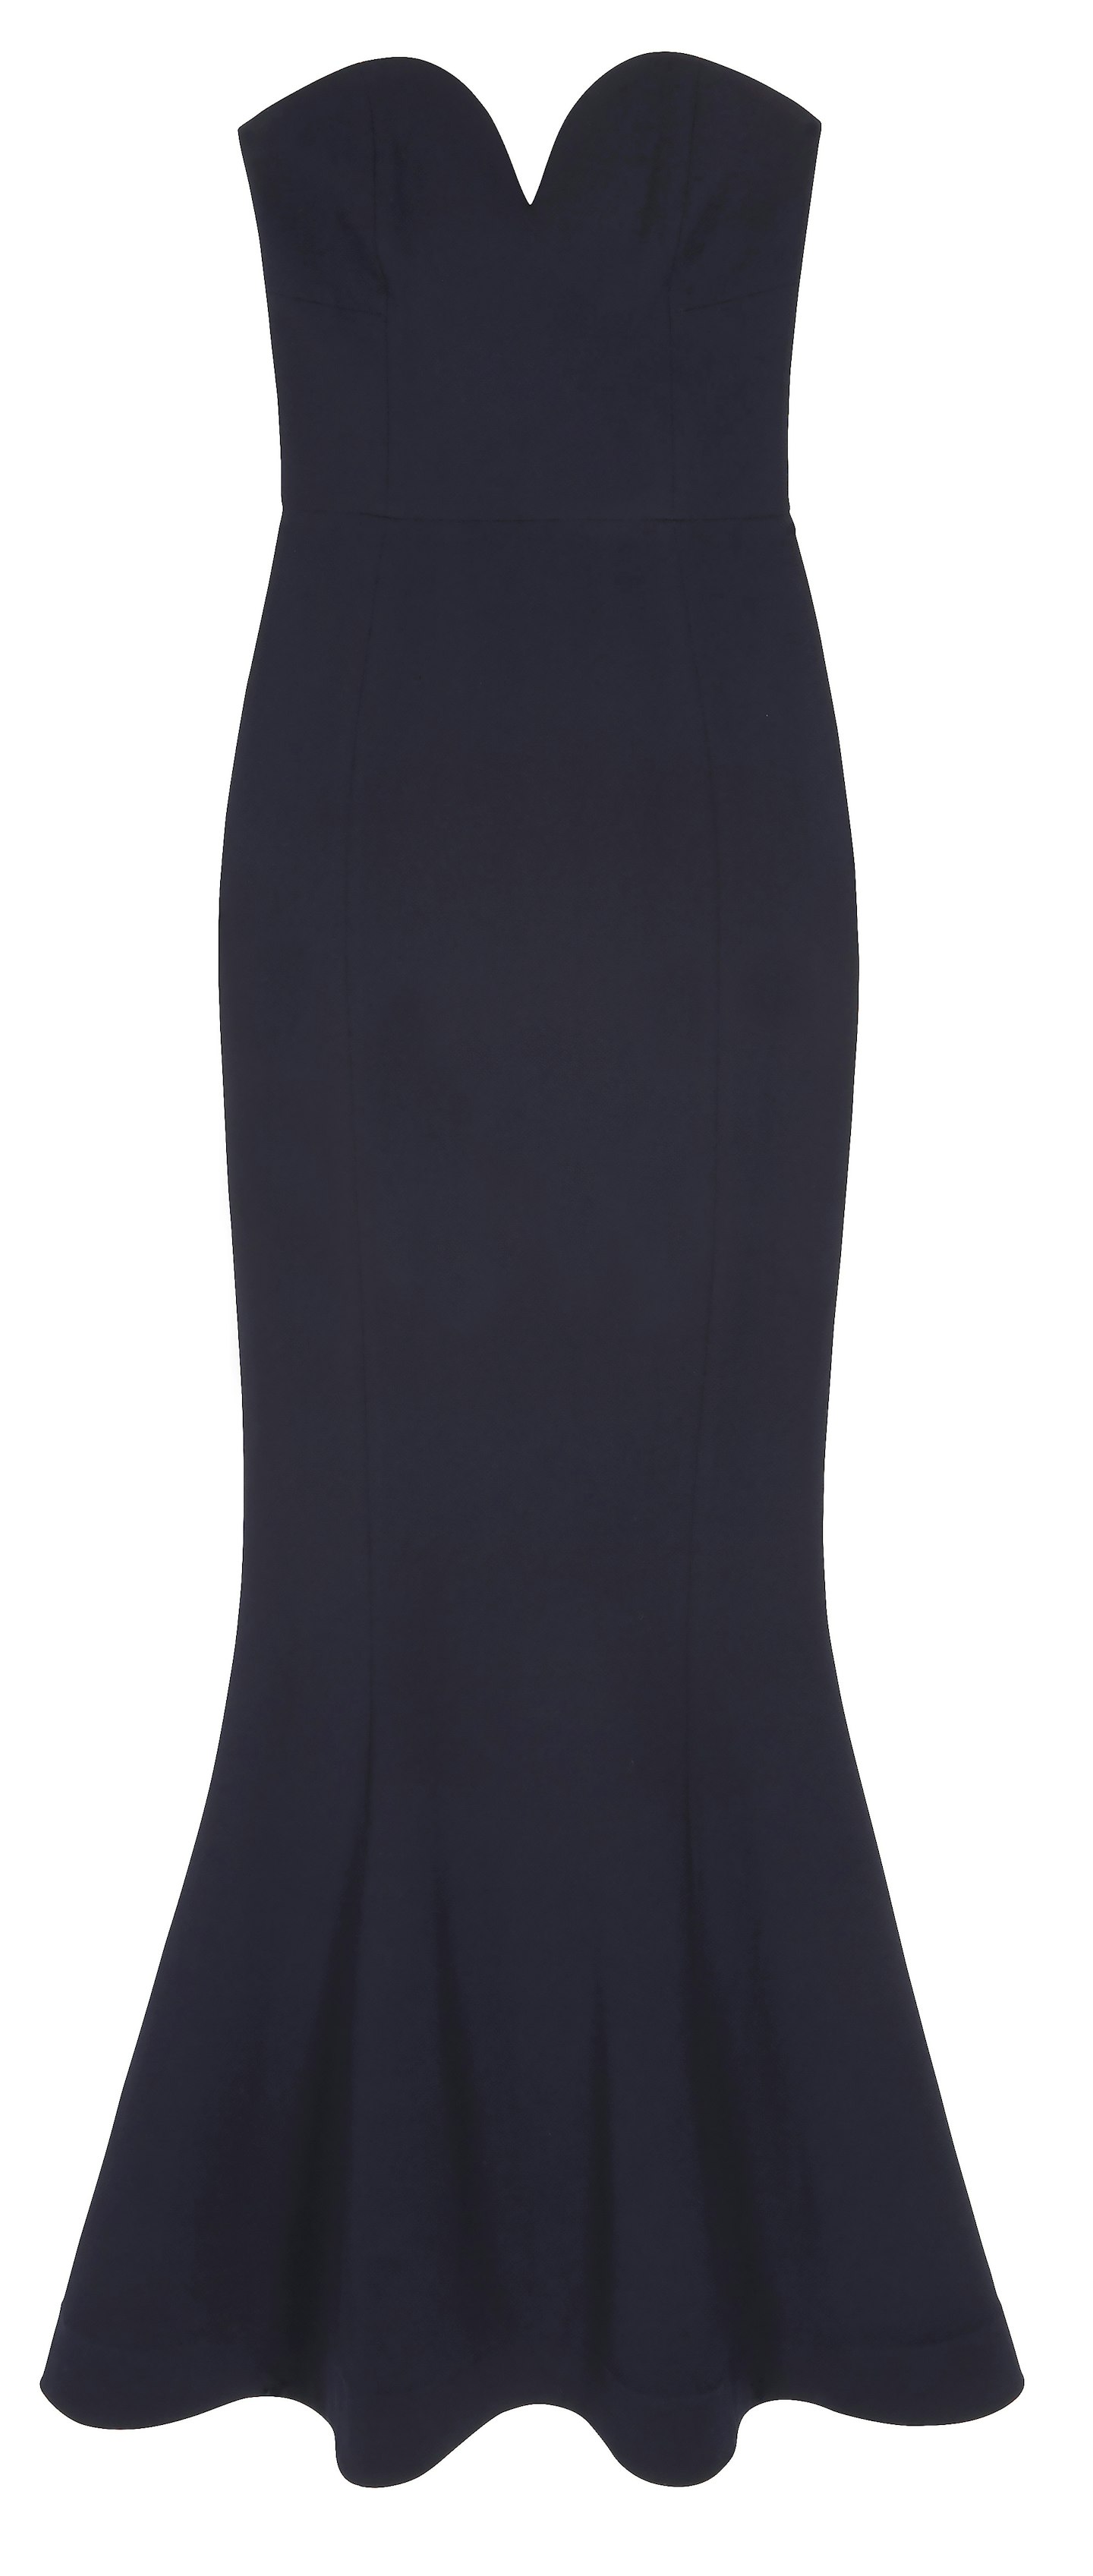 Rebecca Vallance, Strapless Peplum Hem Dress, £345